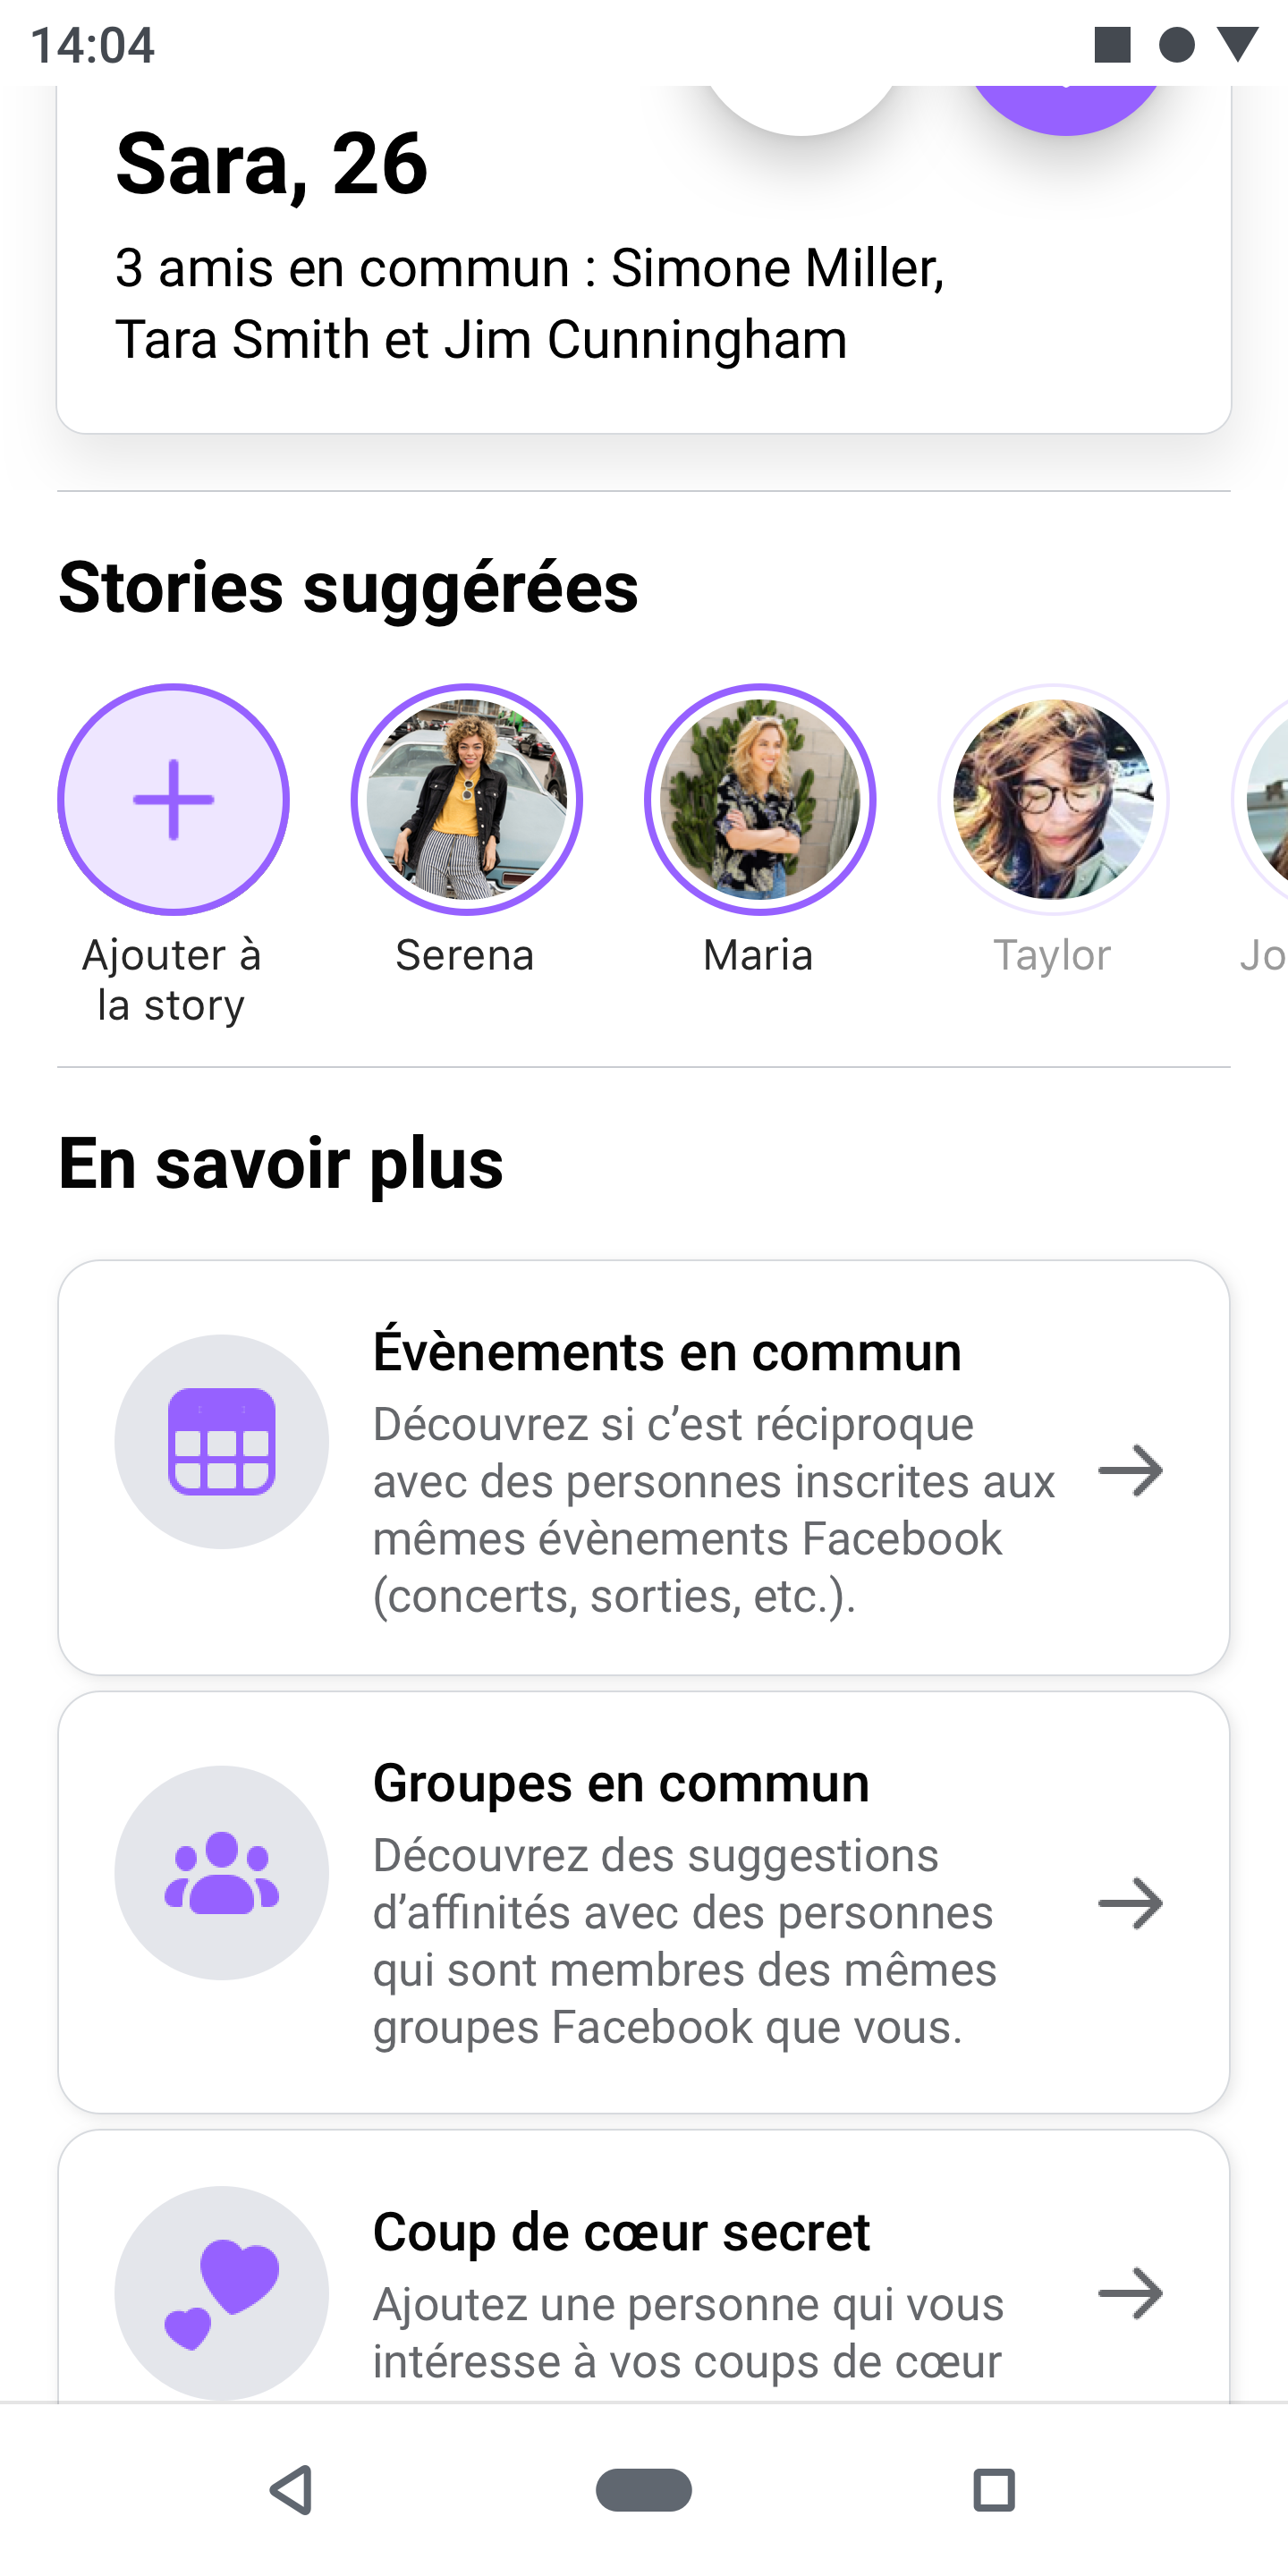 Facebook Dating arrive en France (ou comment rencontrer l’amour dans son Facebook) - Elle